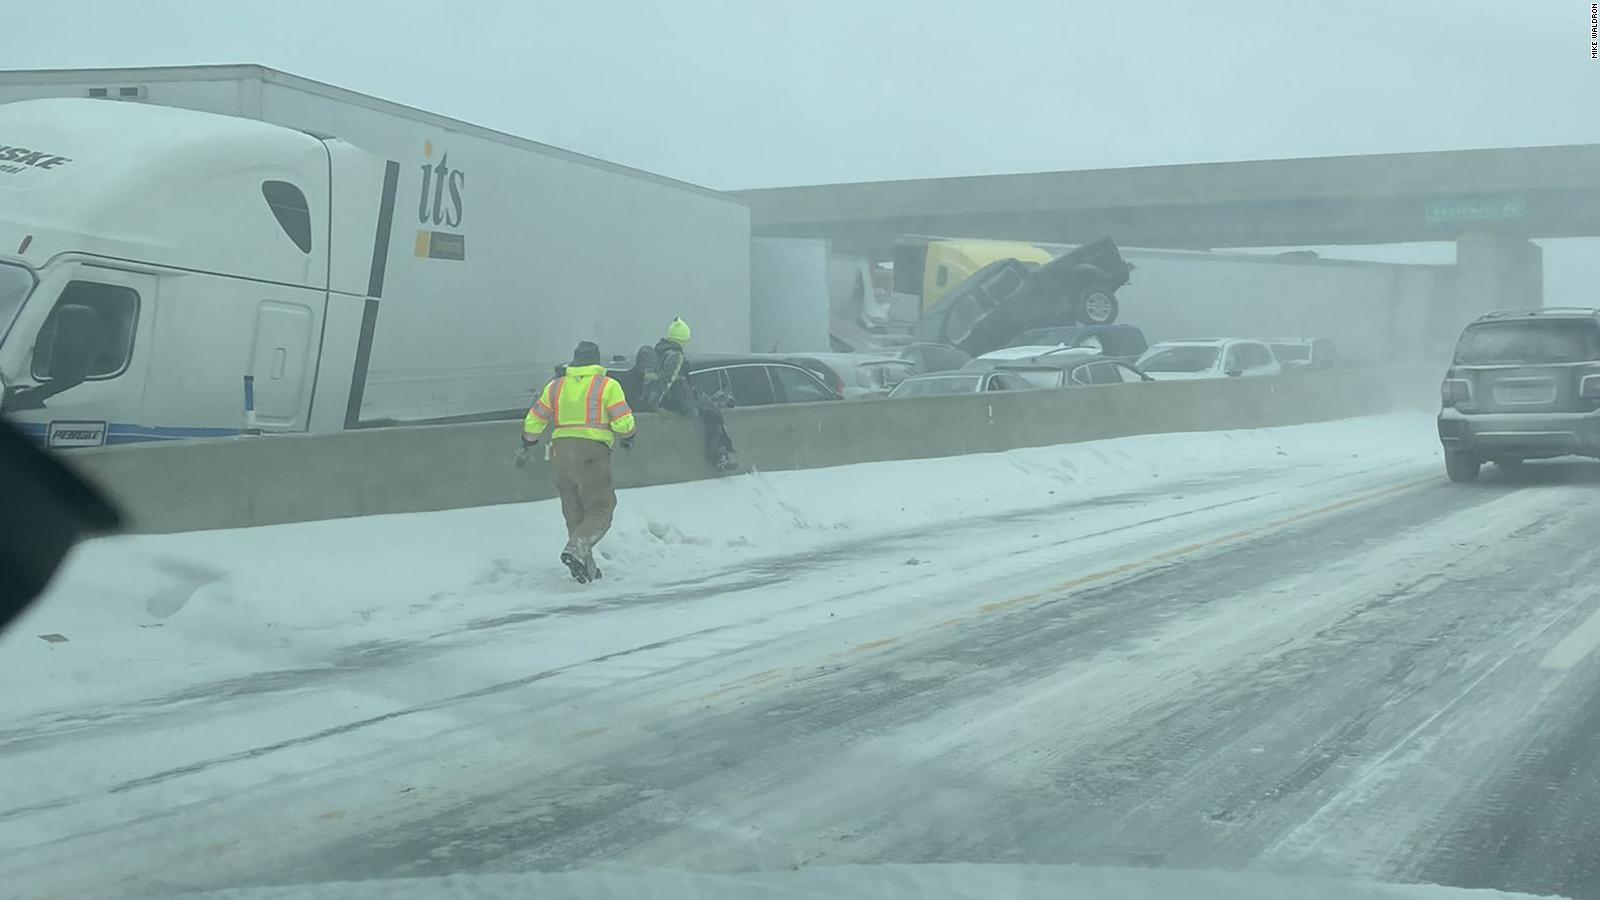 50 cars collide in winter storm in Ohio